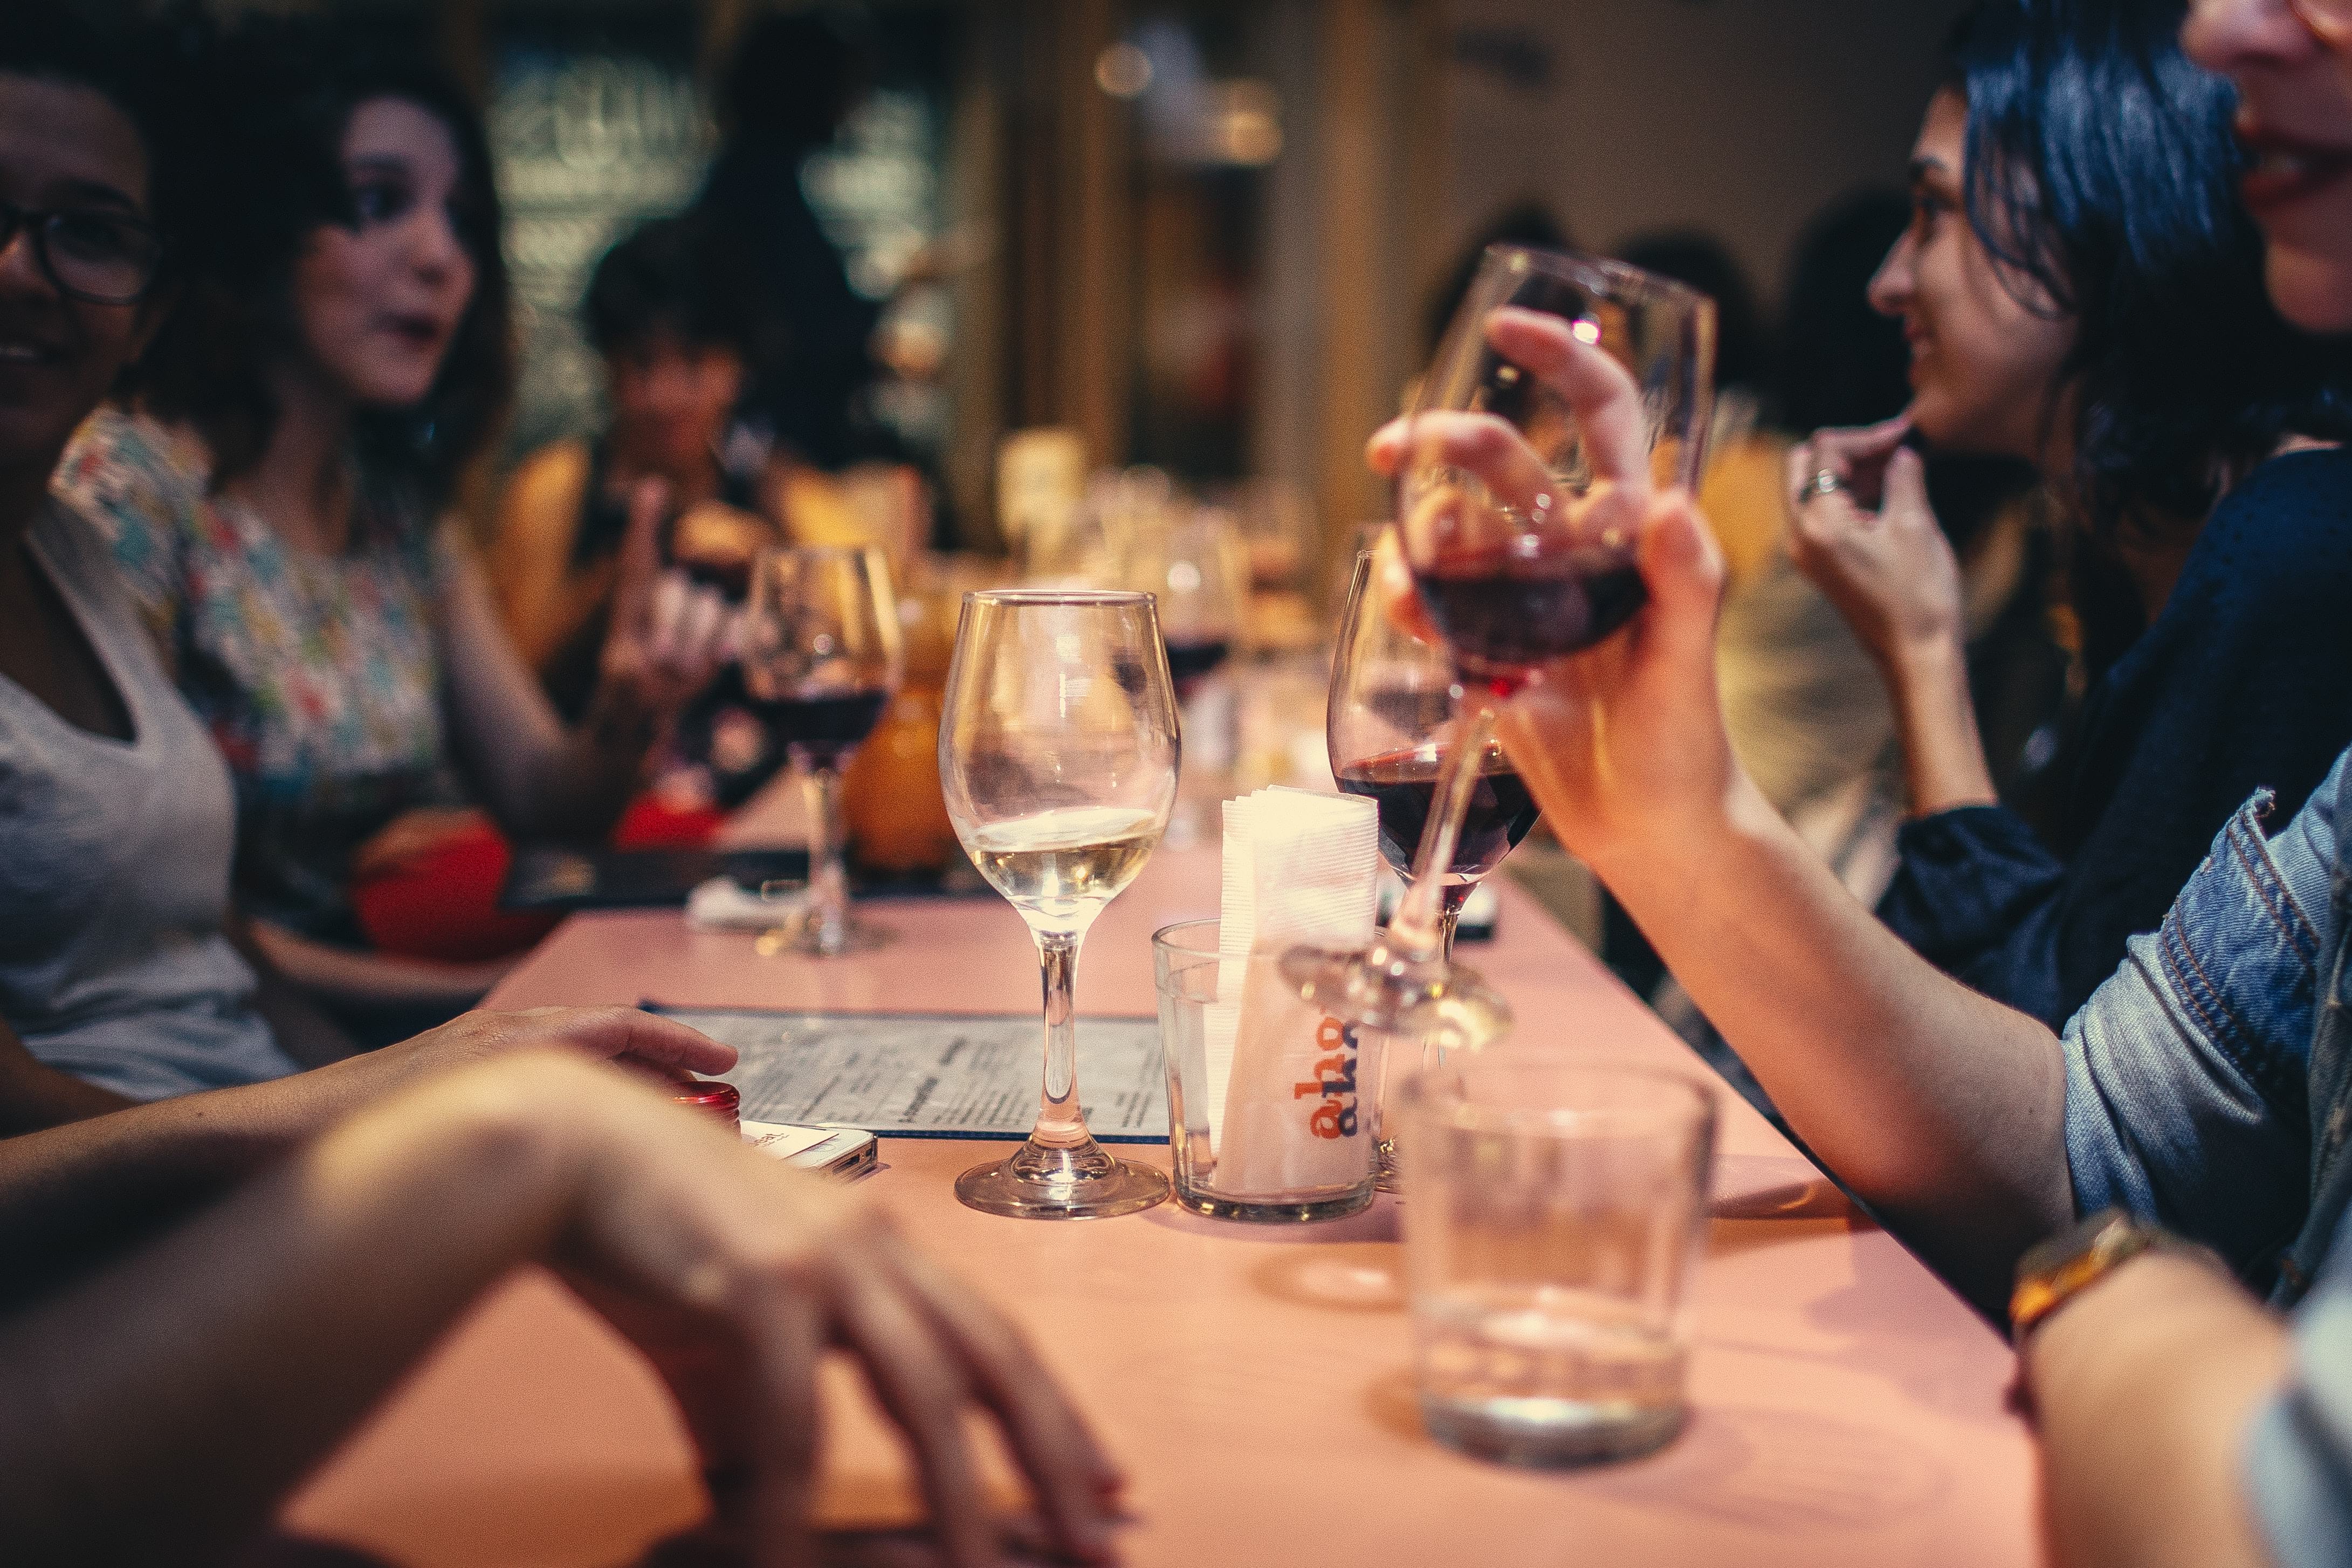 WPI_wsi-imageoptim-people-drinking-liquor-and-talking-on-dining-table-close-up-696218.jpg